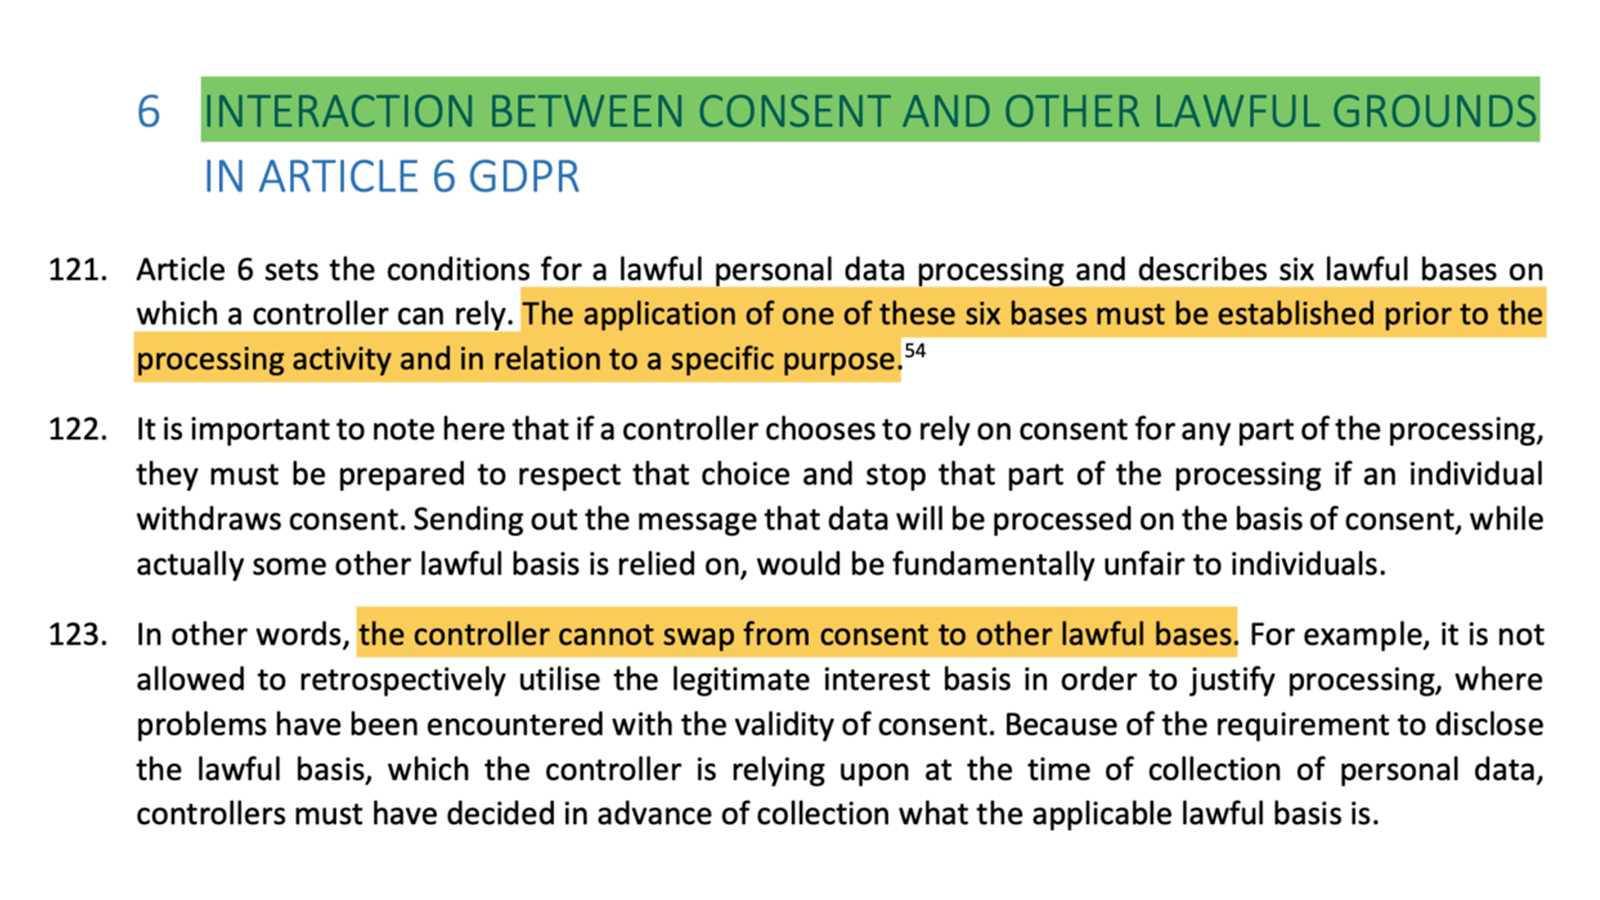 Guidelines 05/2020 on consent under Regulation 2016/679 https://edpb.europa.eu/sites/default/files/files/file1/edpb_guidelines_202005_consent_en.pdf